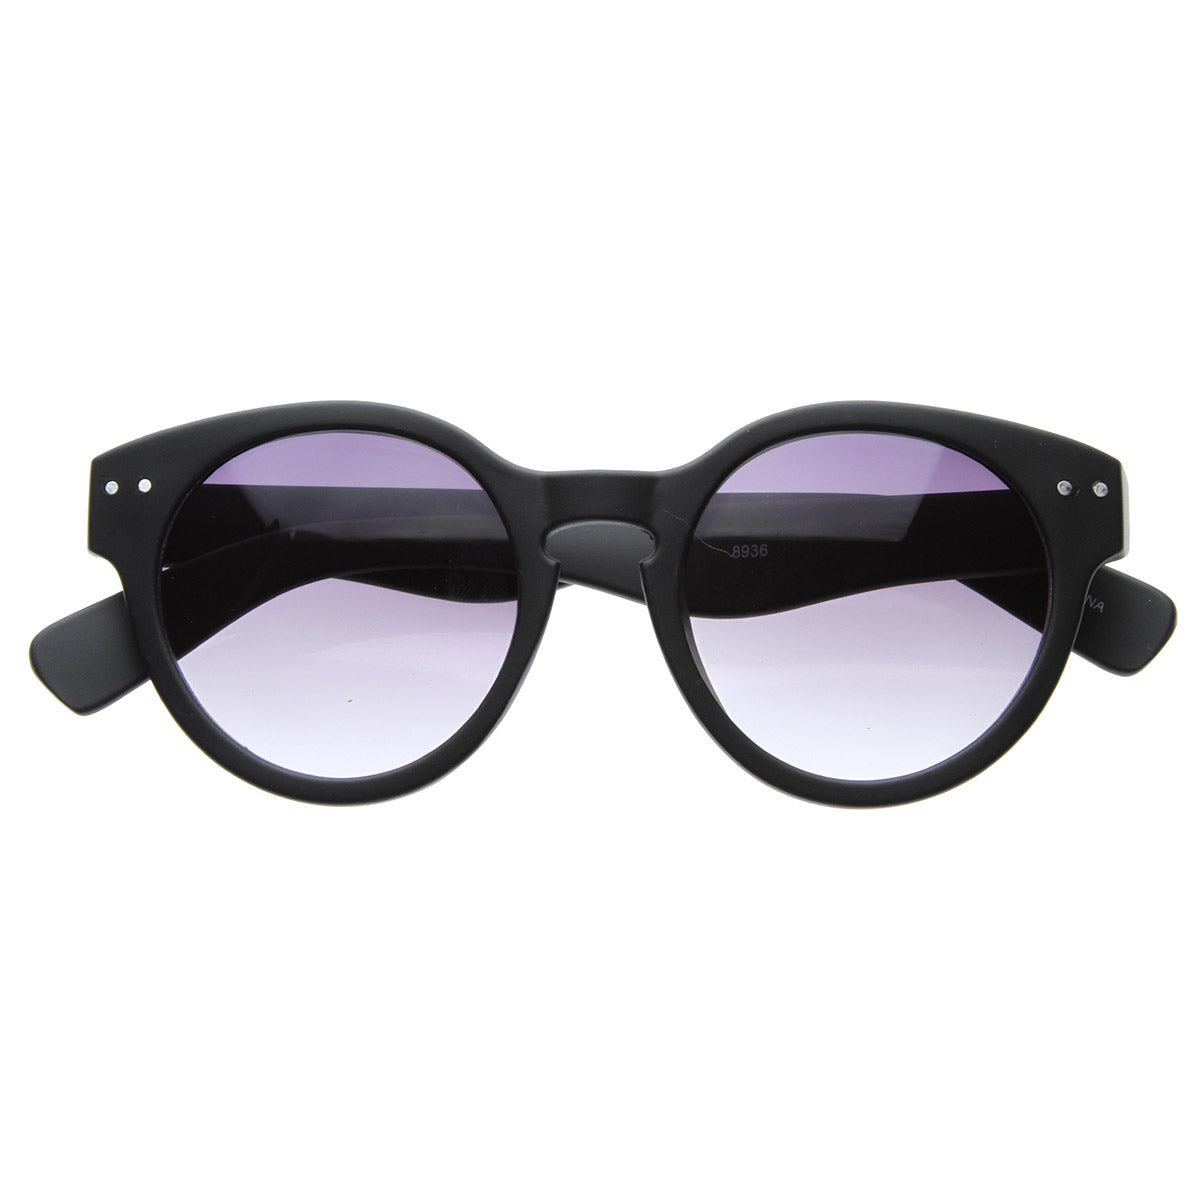 Retro Eyewear Vintage Inspired Bold Thick Circle Frames Round Sunglasses, Shiny Black